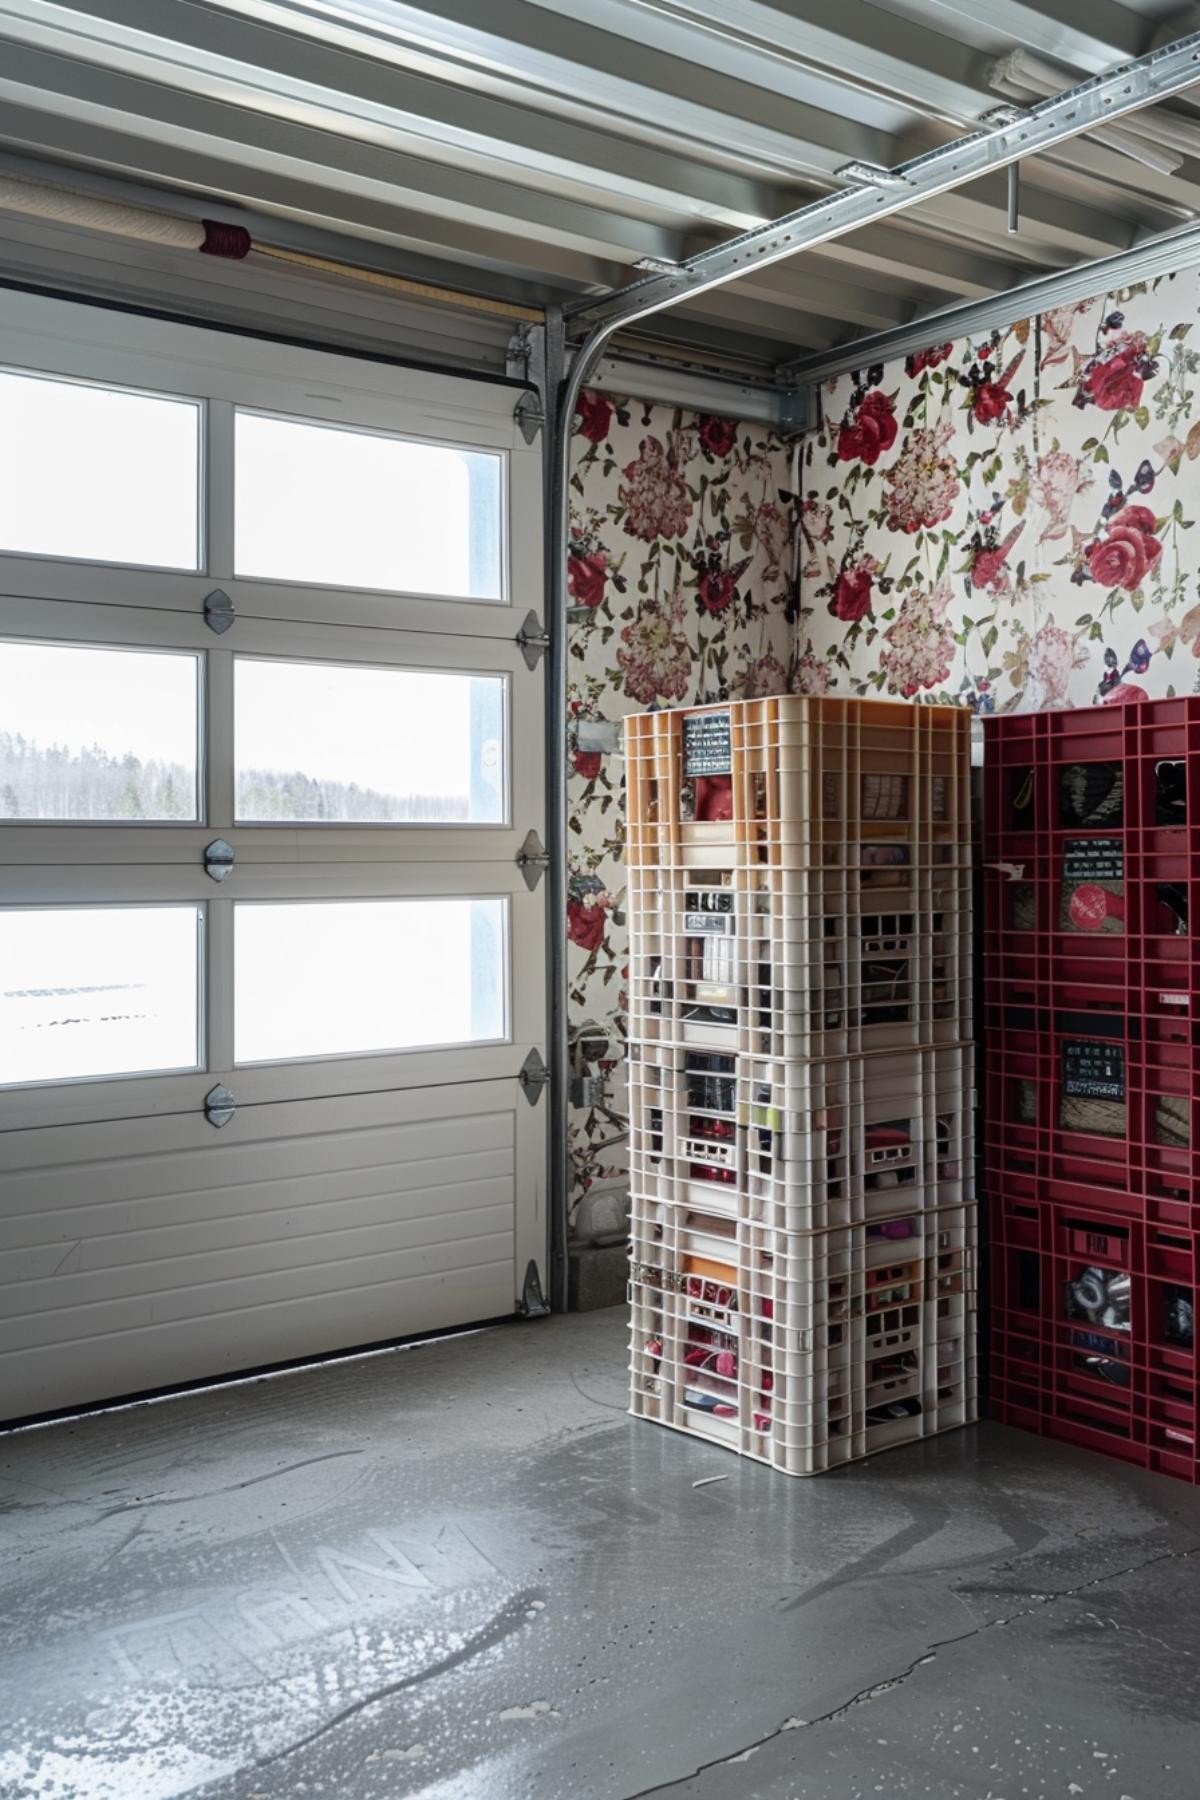 Floral Wallpaper and Plastic Crates